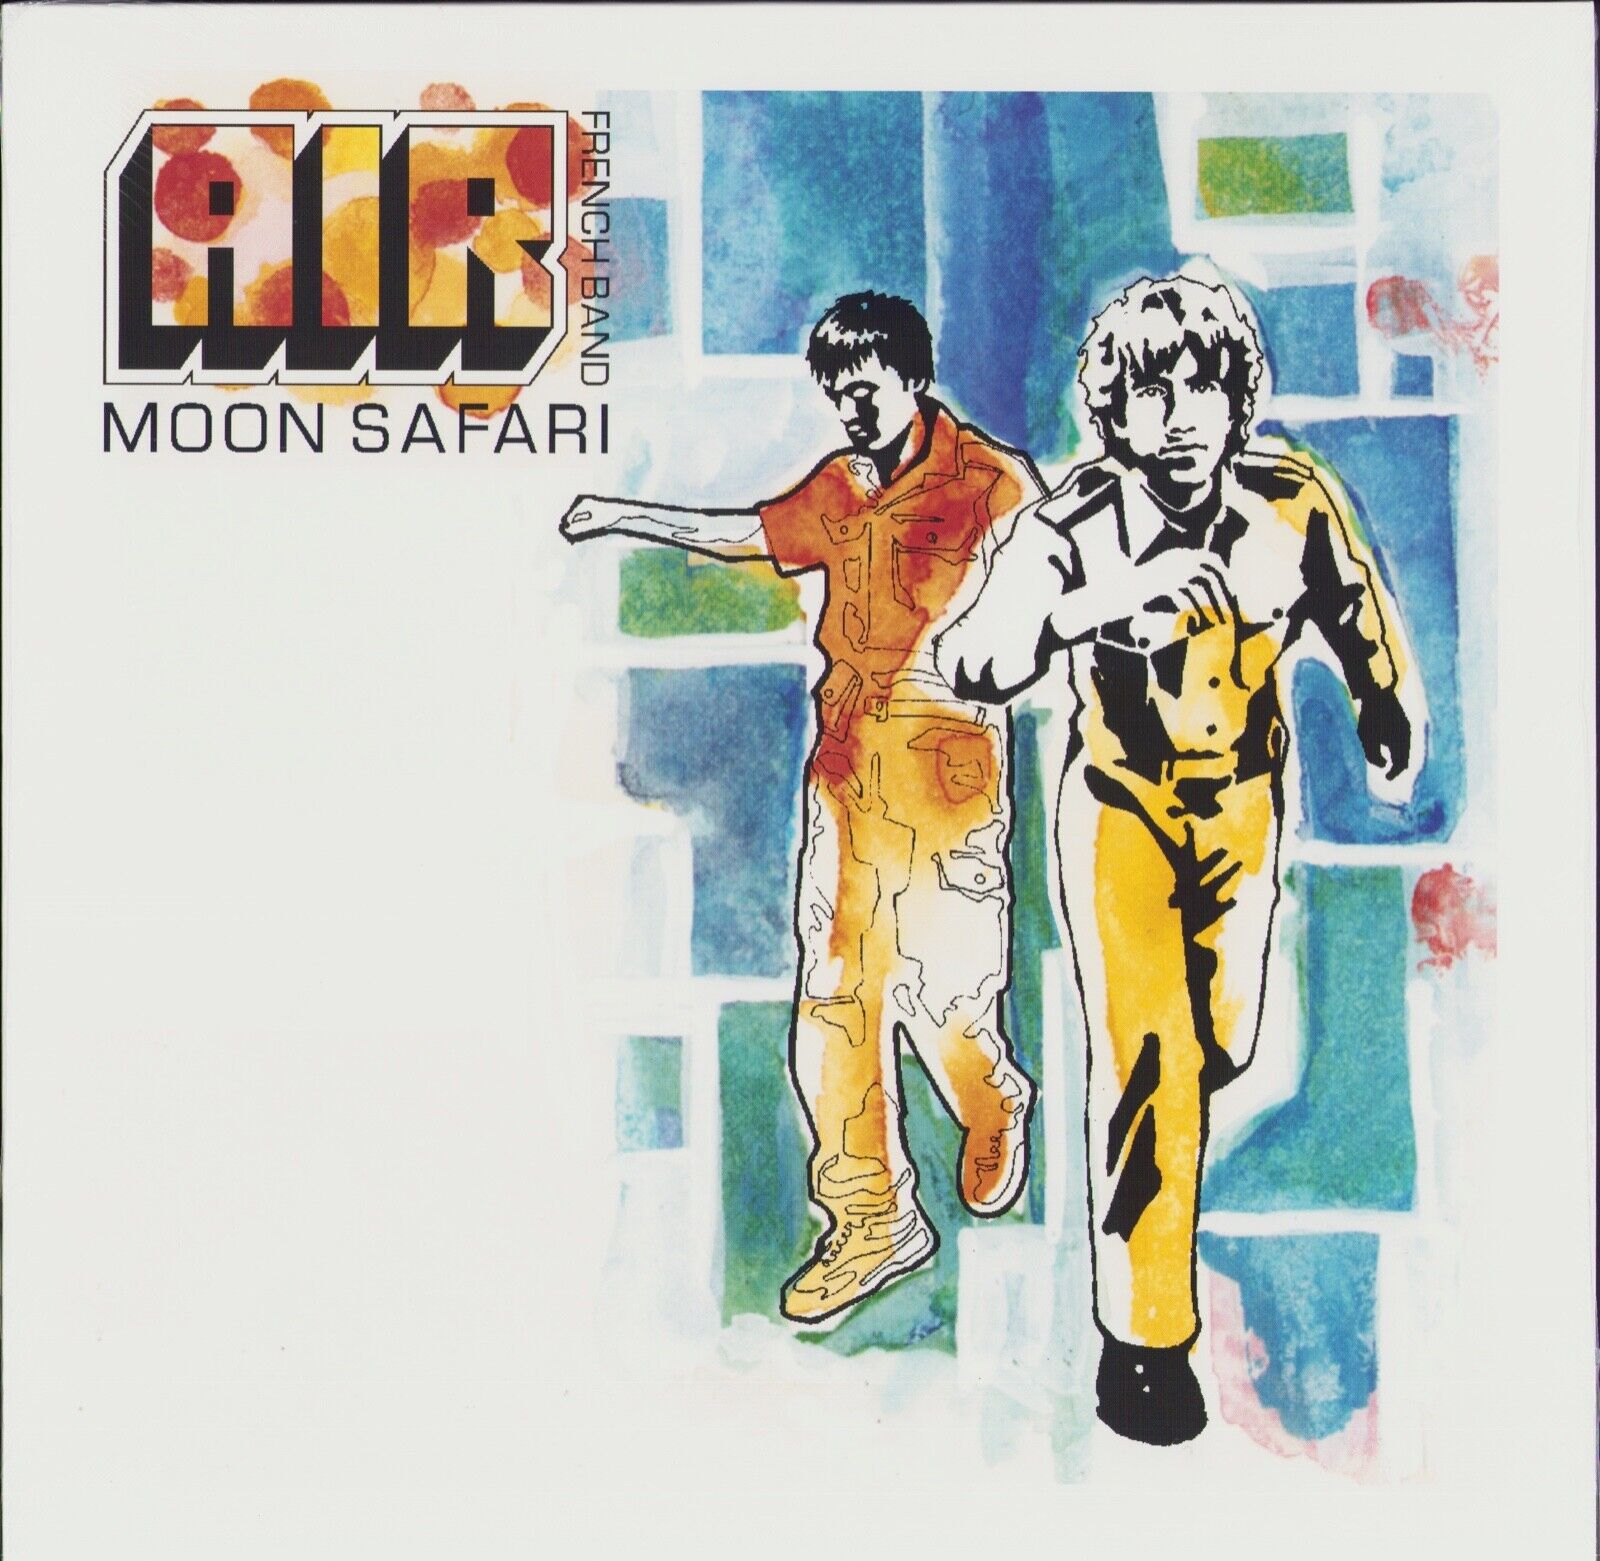 AIR French Band - Moon Safari Vinyl LP